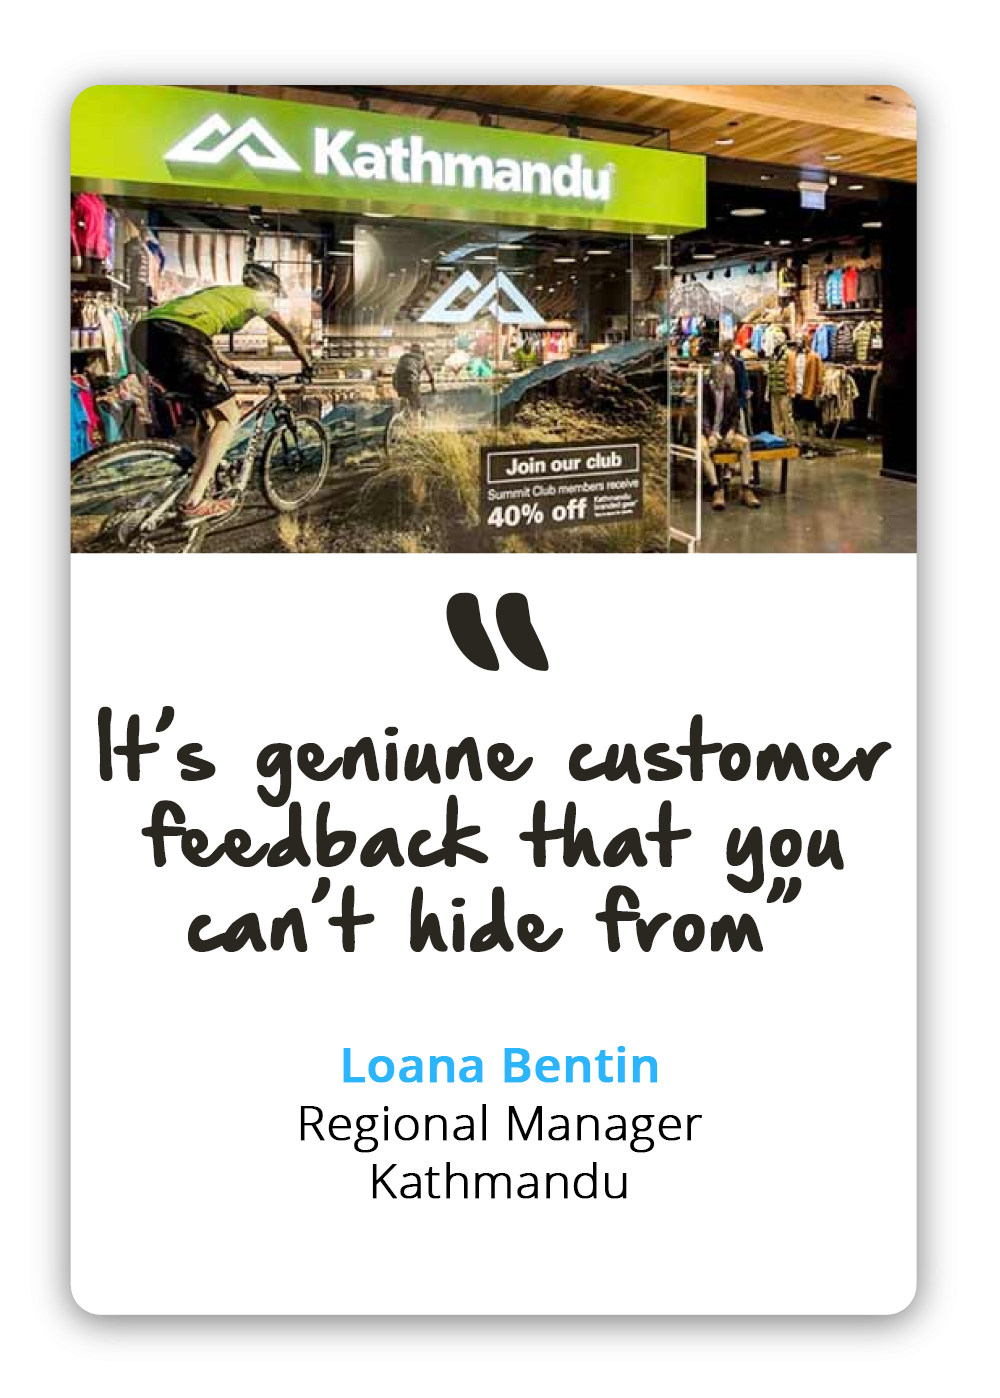 Kathmandu built a more confident customer profile using customer feedback tool